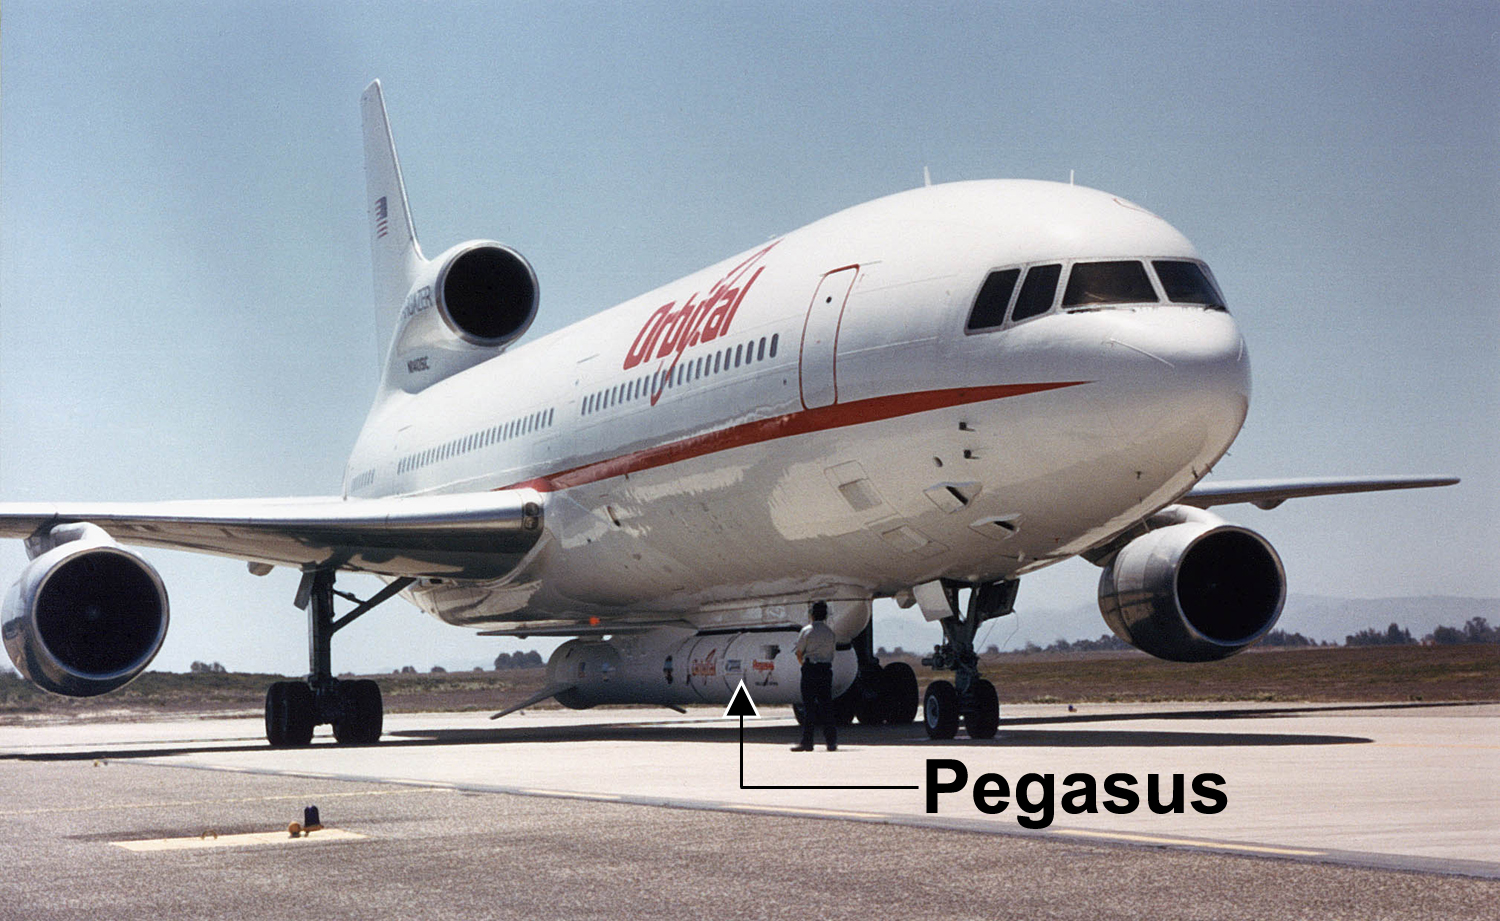 The L-1011 Stargazer and Pegasus